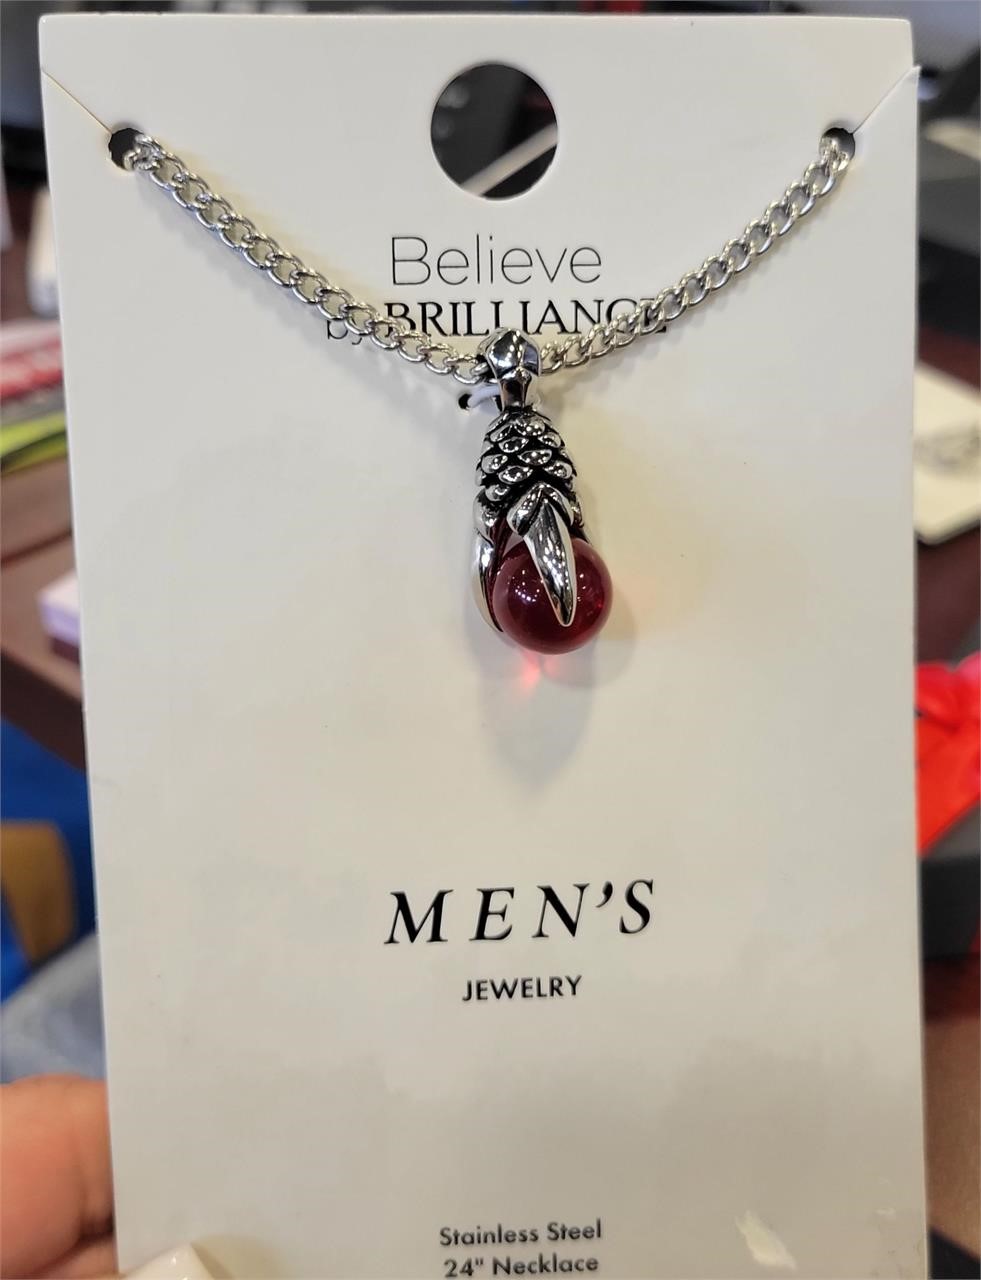 Believe by Brilliance Men's Stainless Neckalace